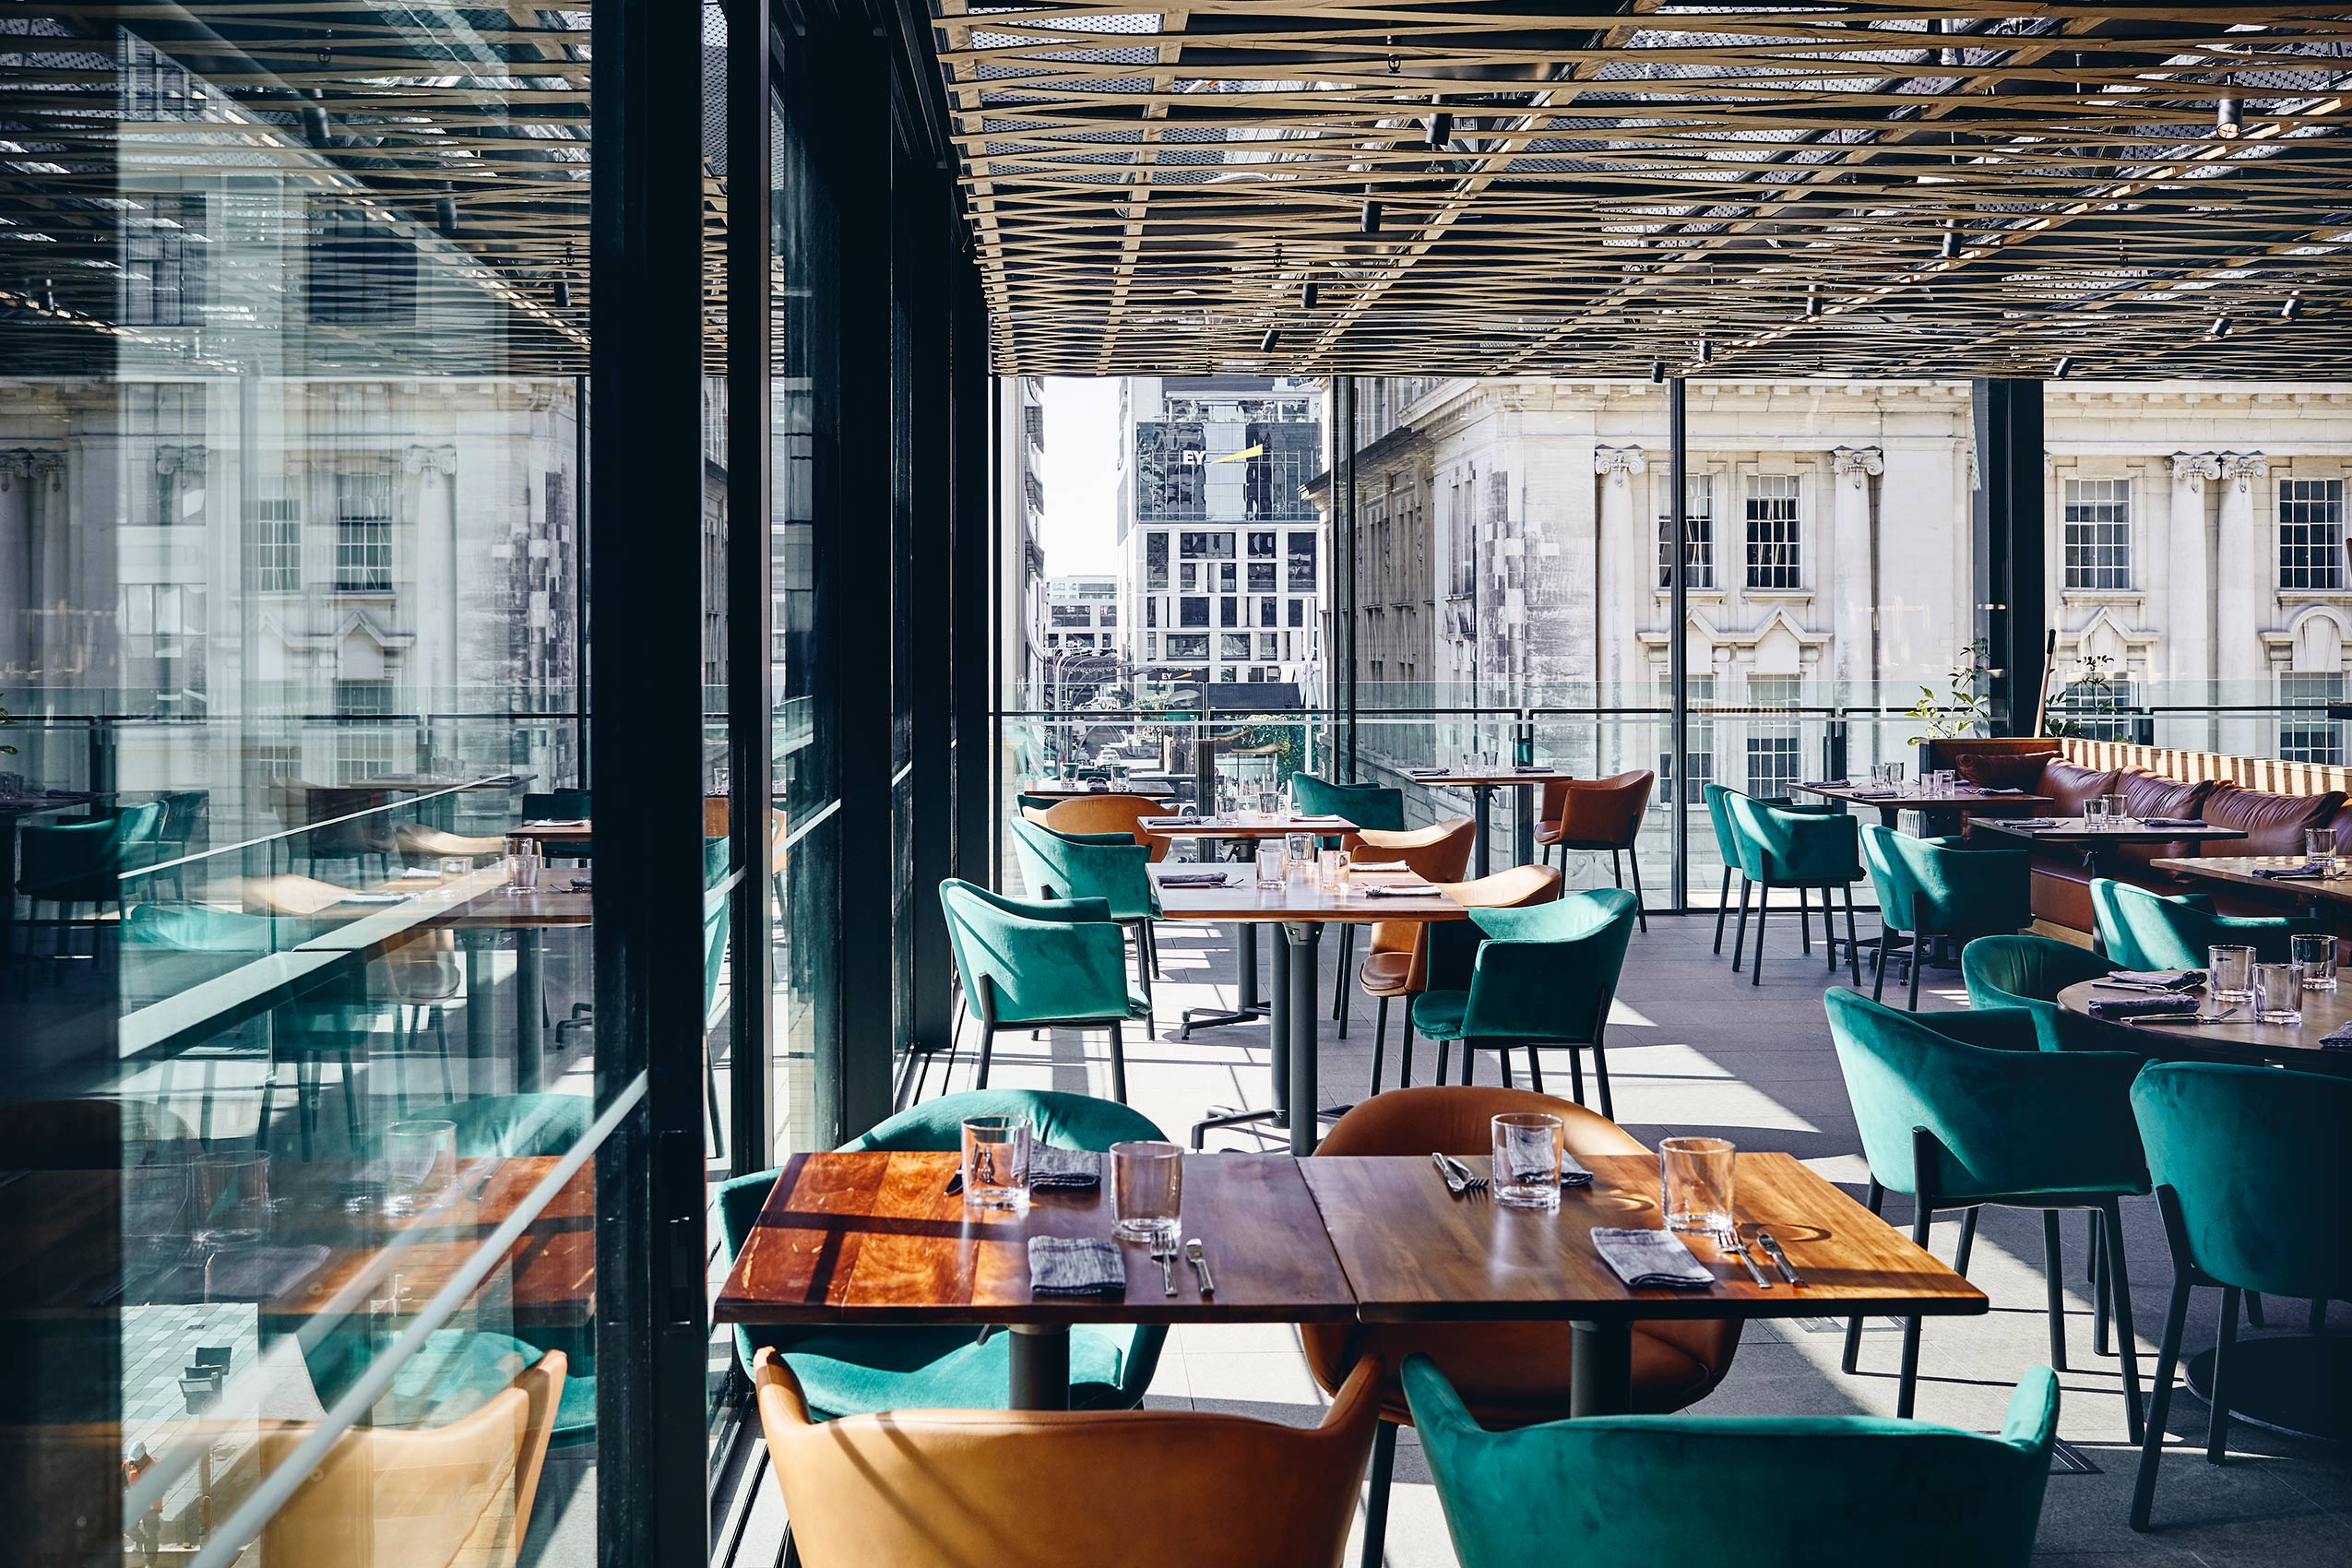 Ahi Dining Room with Full-Length Windows • Hospitality & Culinary Food Photography